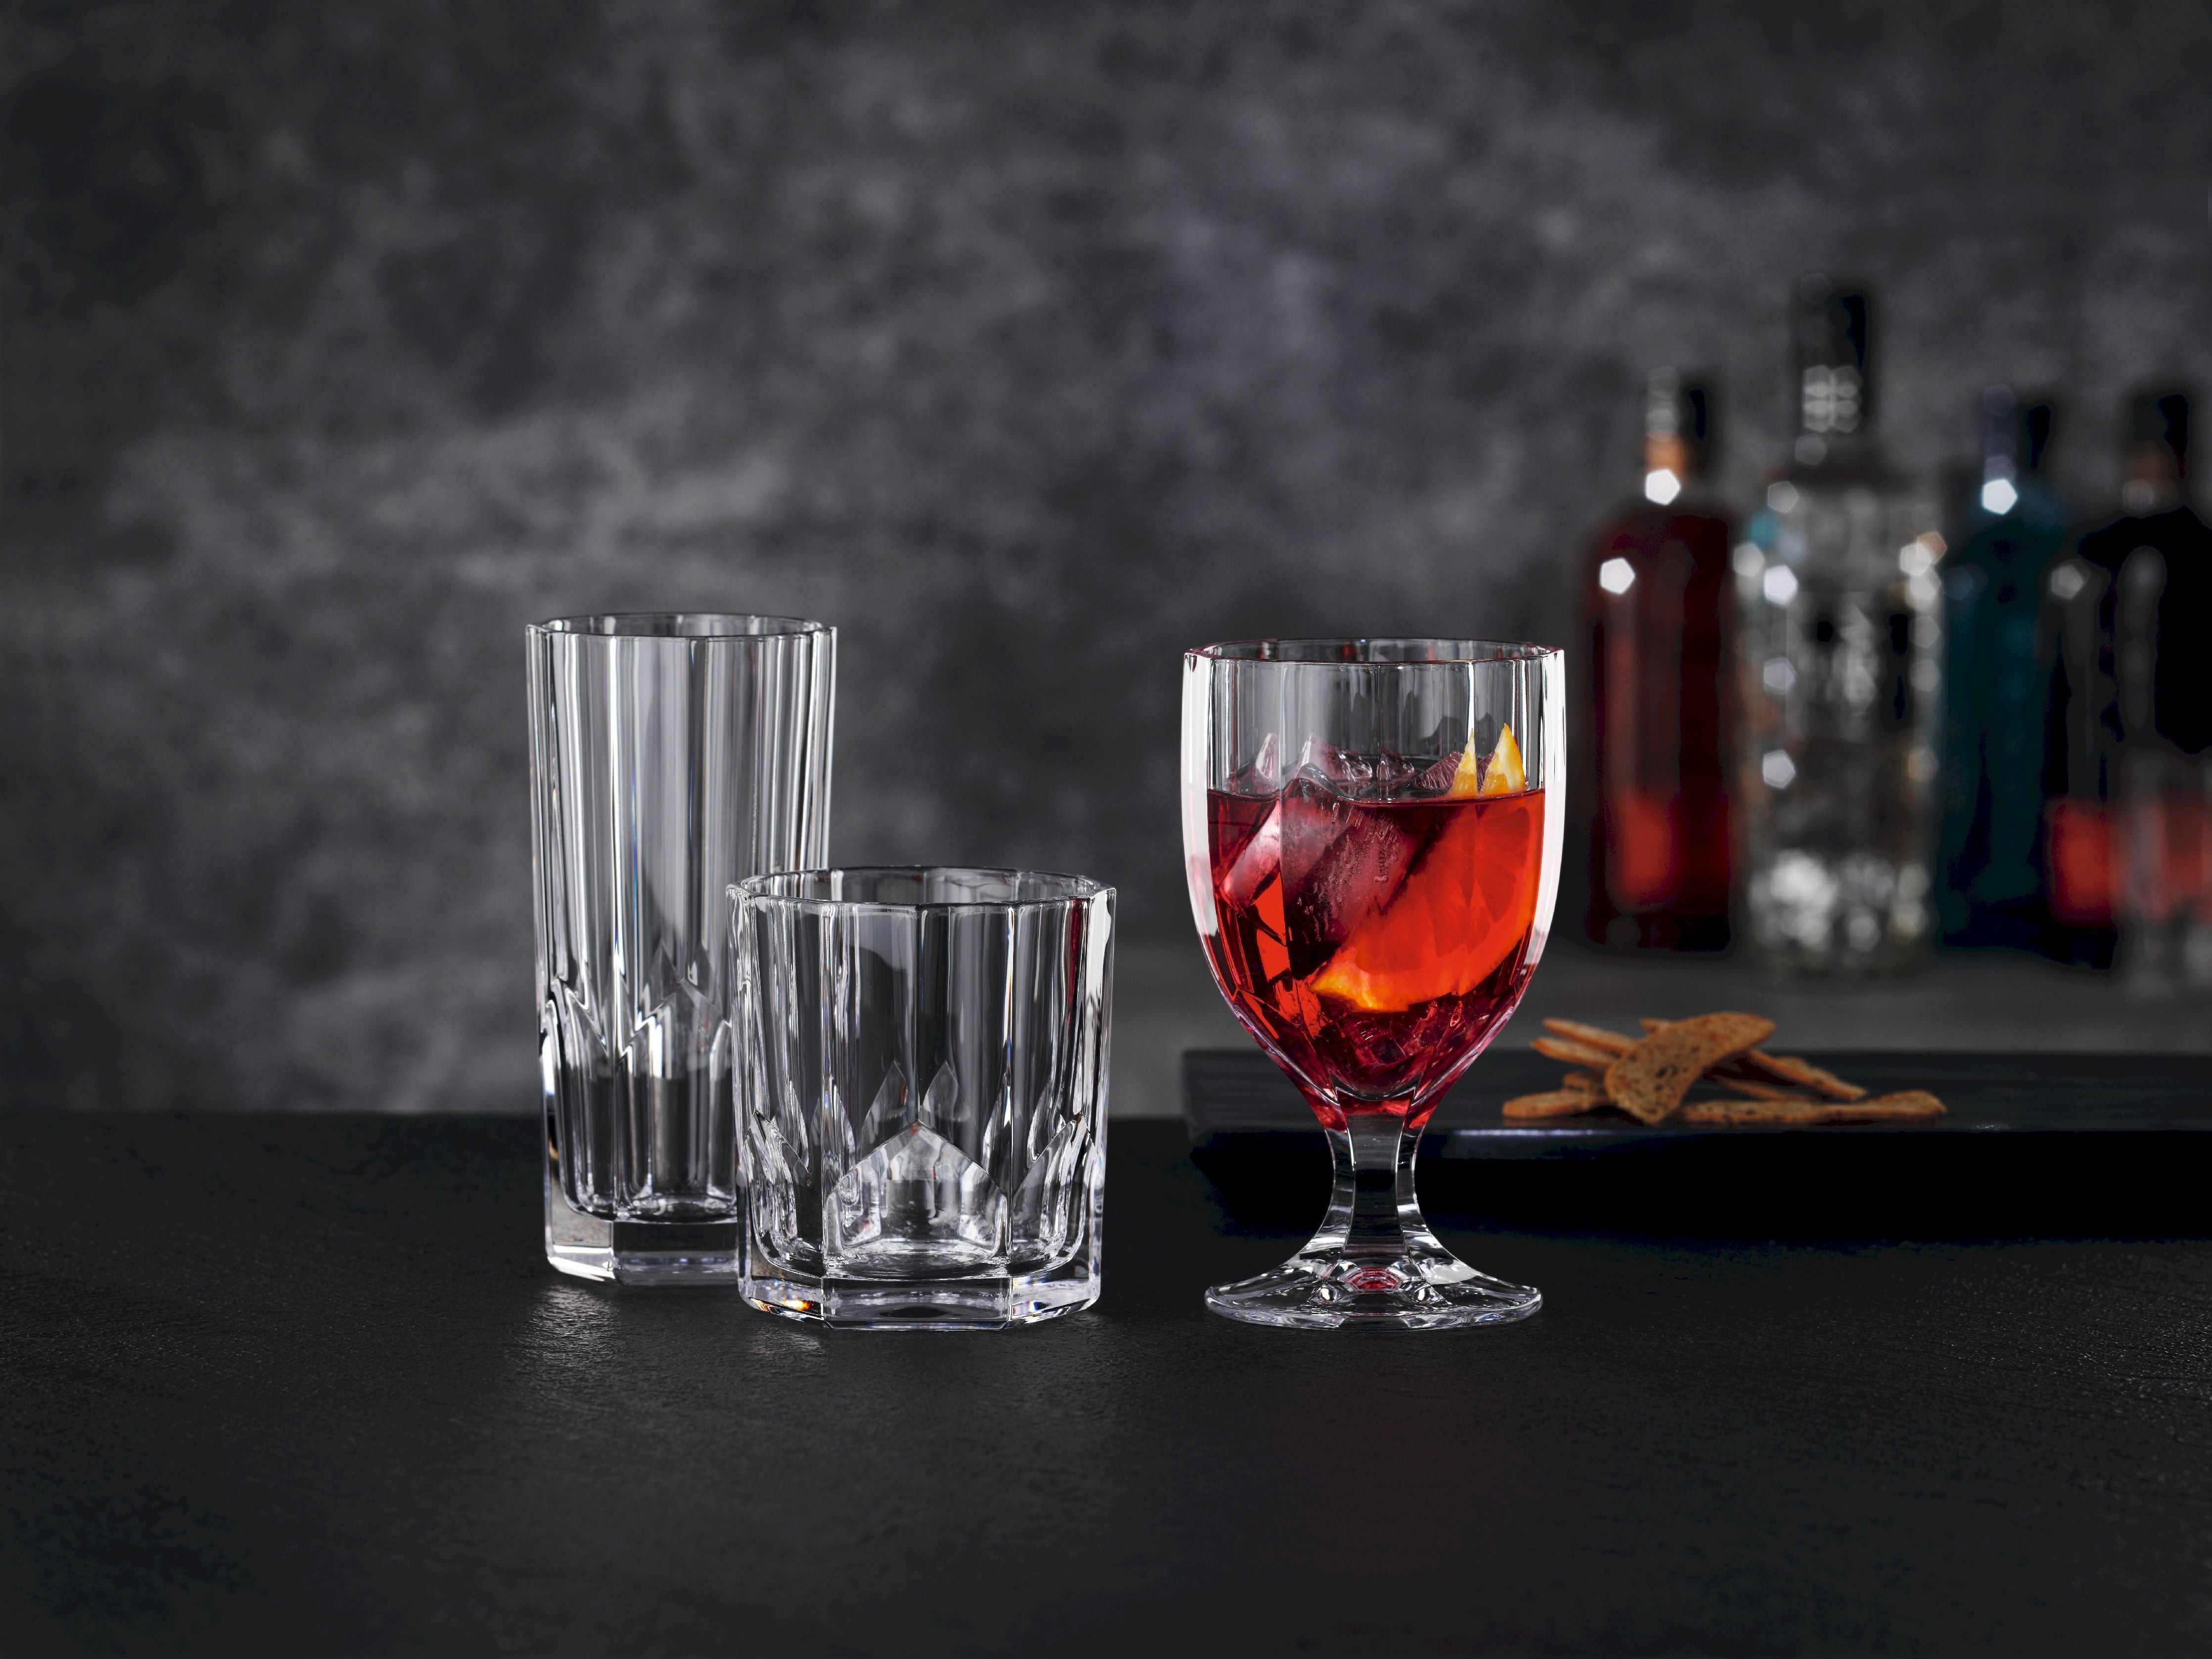 Nachtmann Aspen Whiskey Glass 324 ml, set di 4